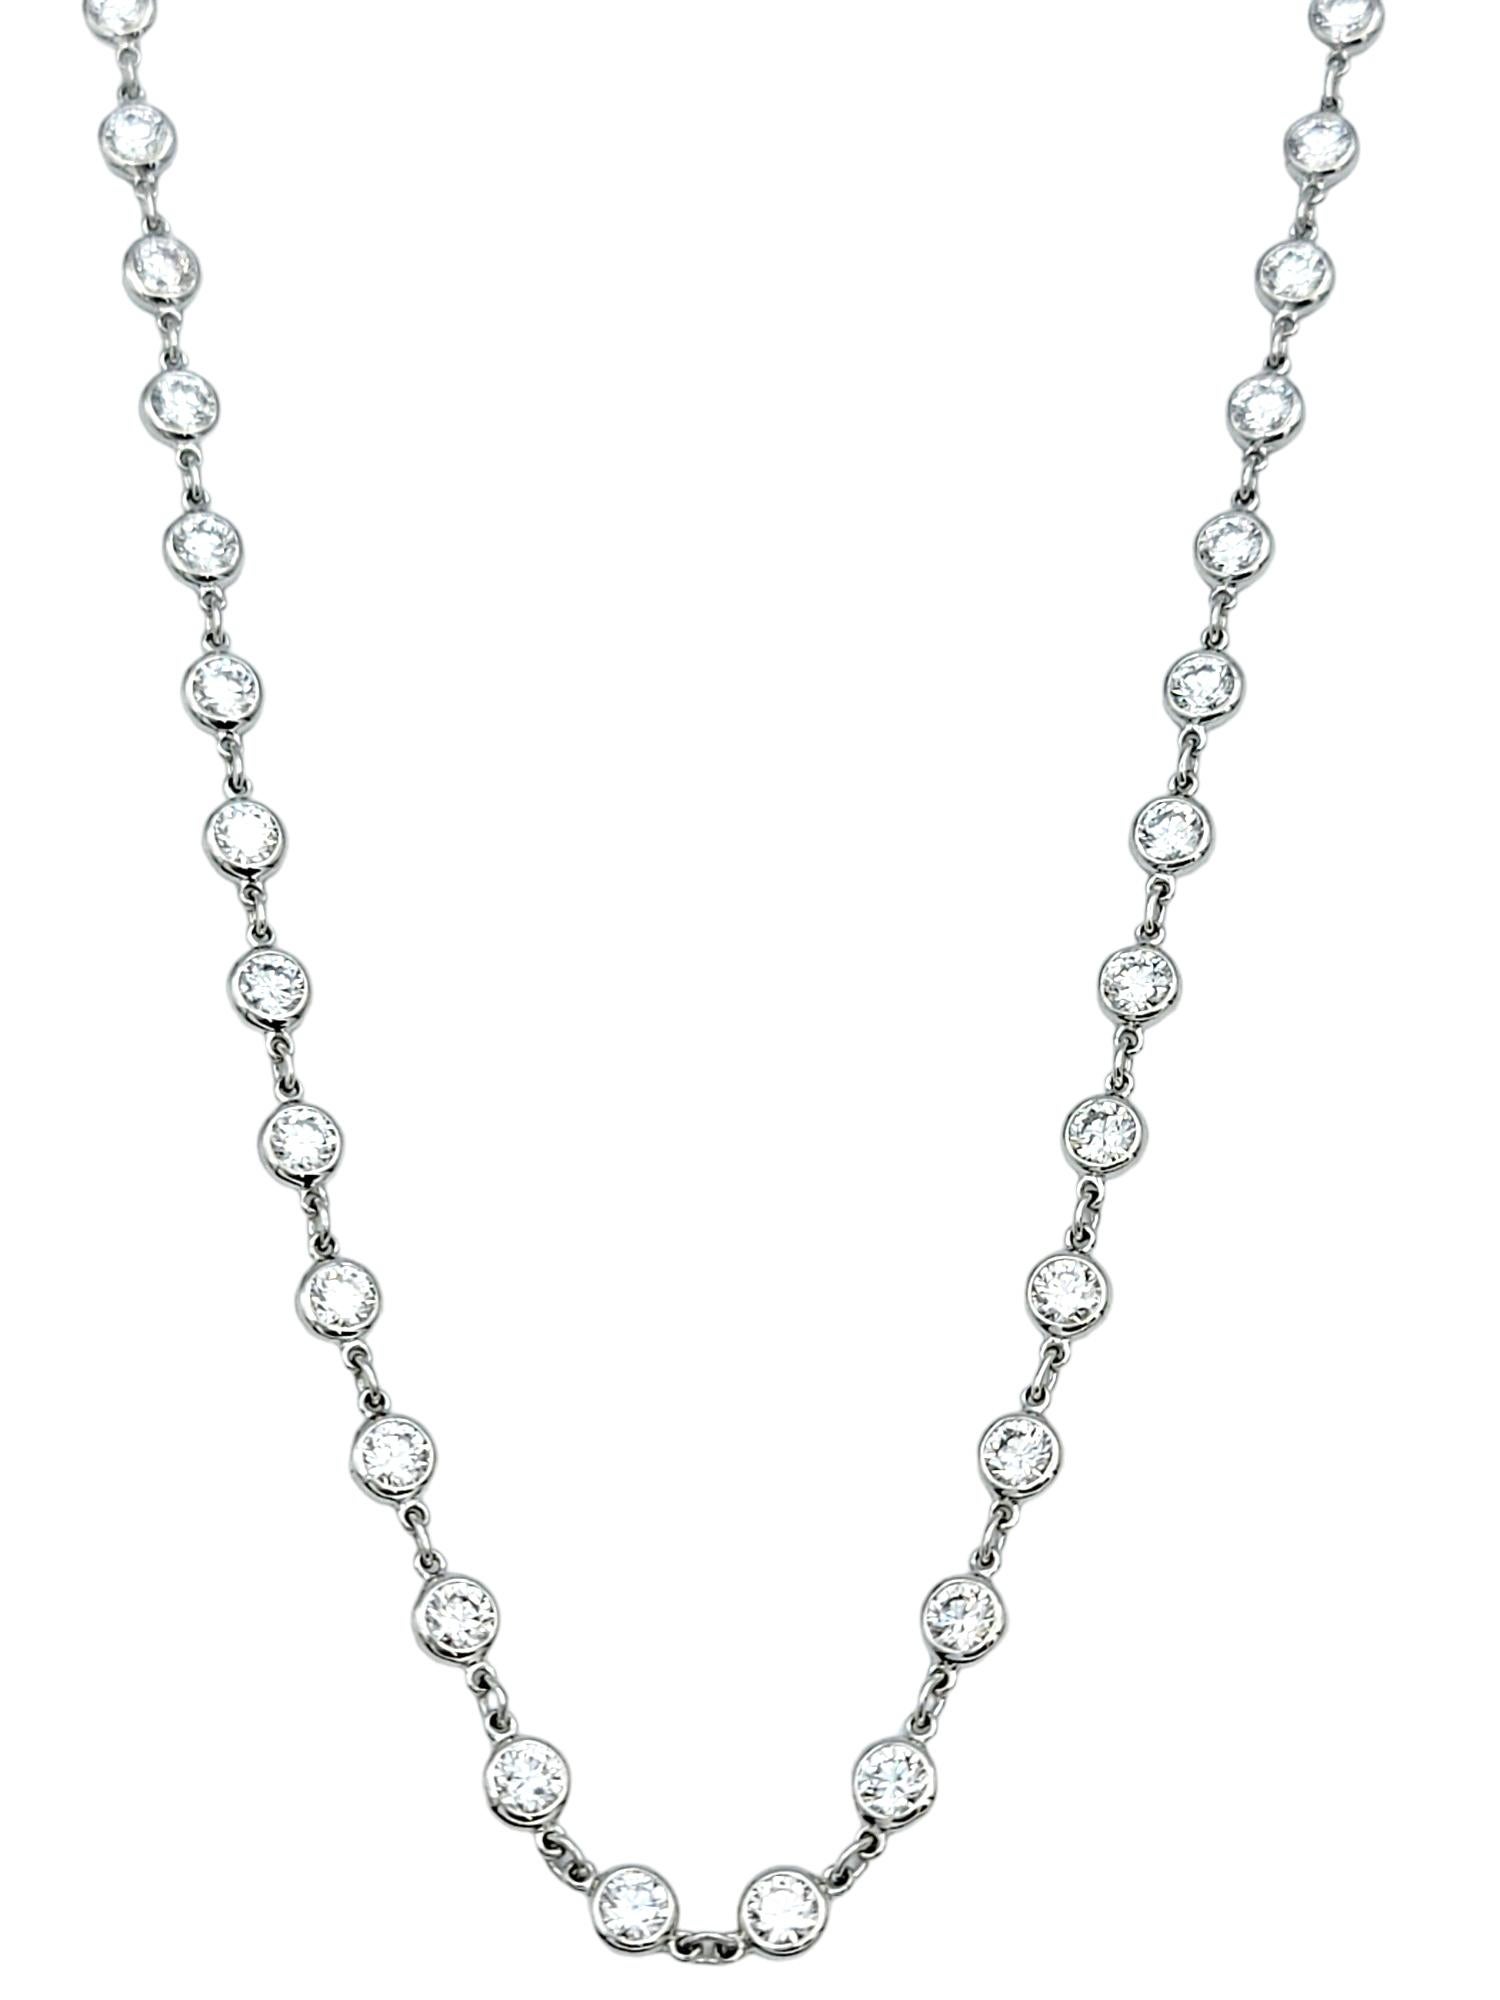 Taille ronde Tiffany & Co. Elsa Peretti, collier « Diamonds By The Yard » de 15,25 carats, 38